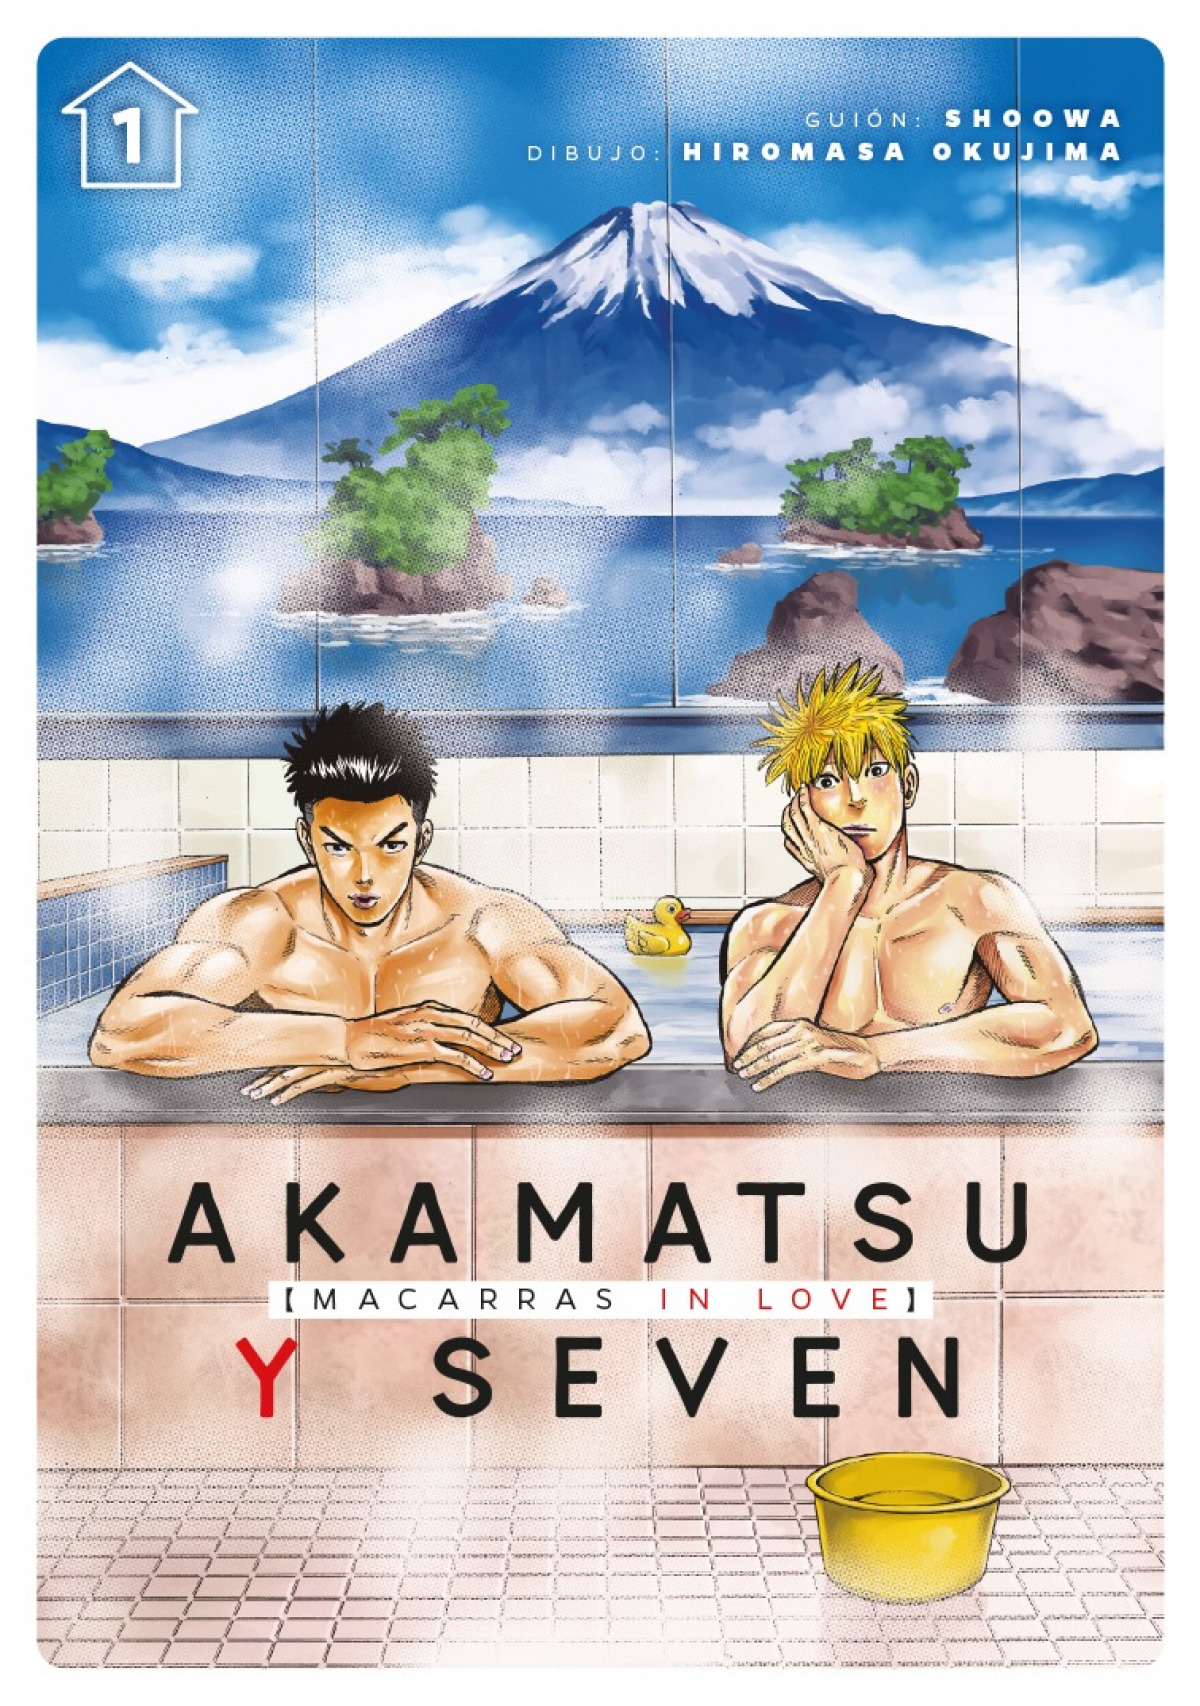 Macarras In Love -Akamatsu y Seven- Book Cover